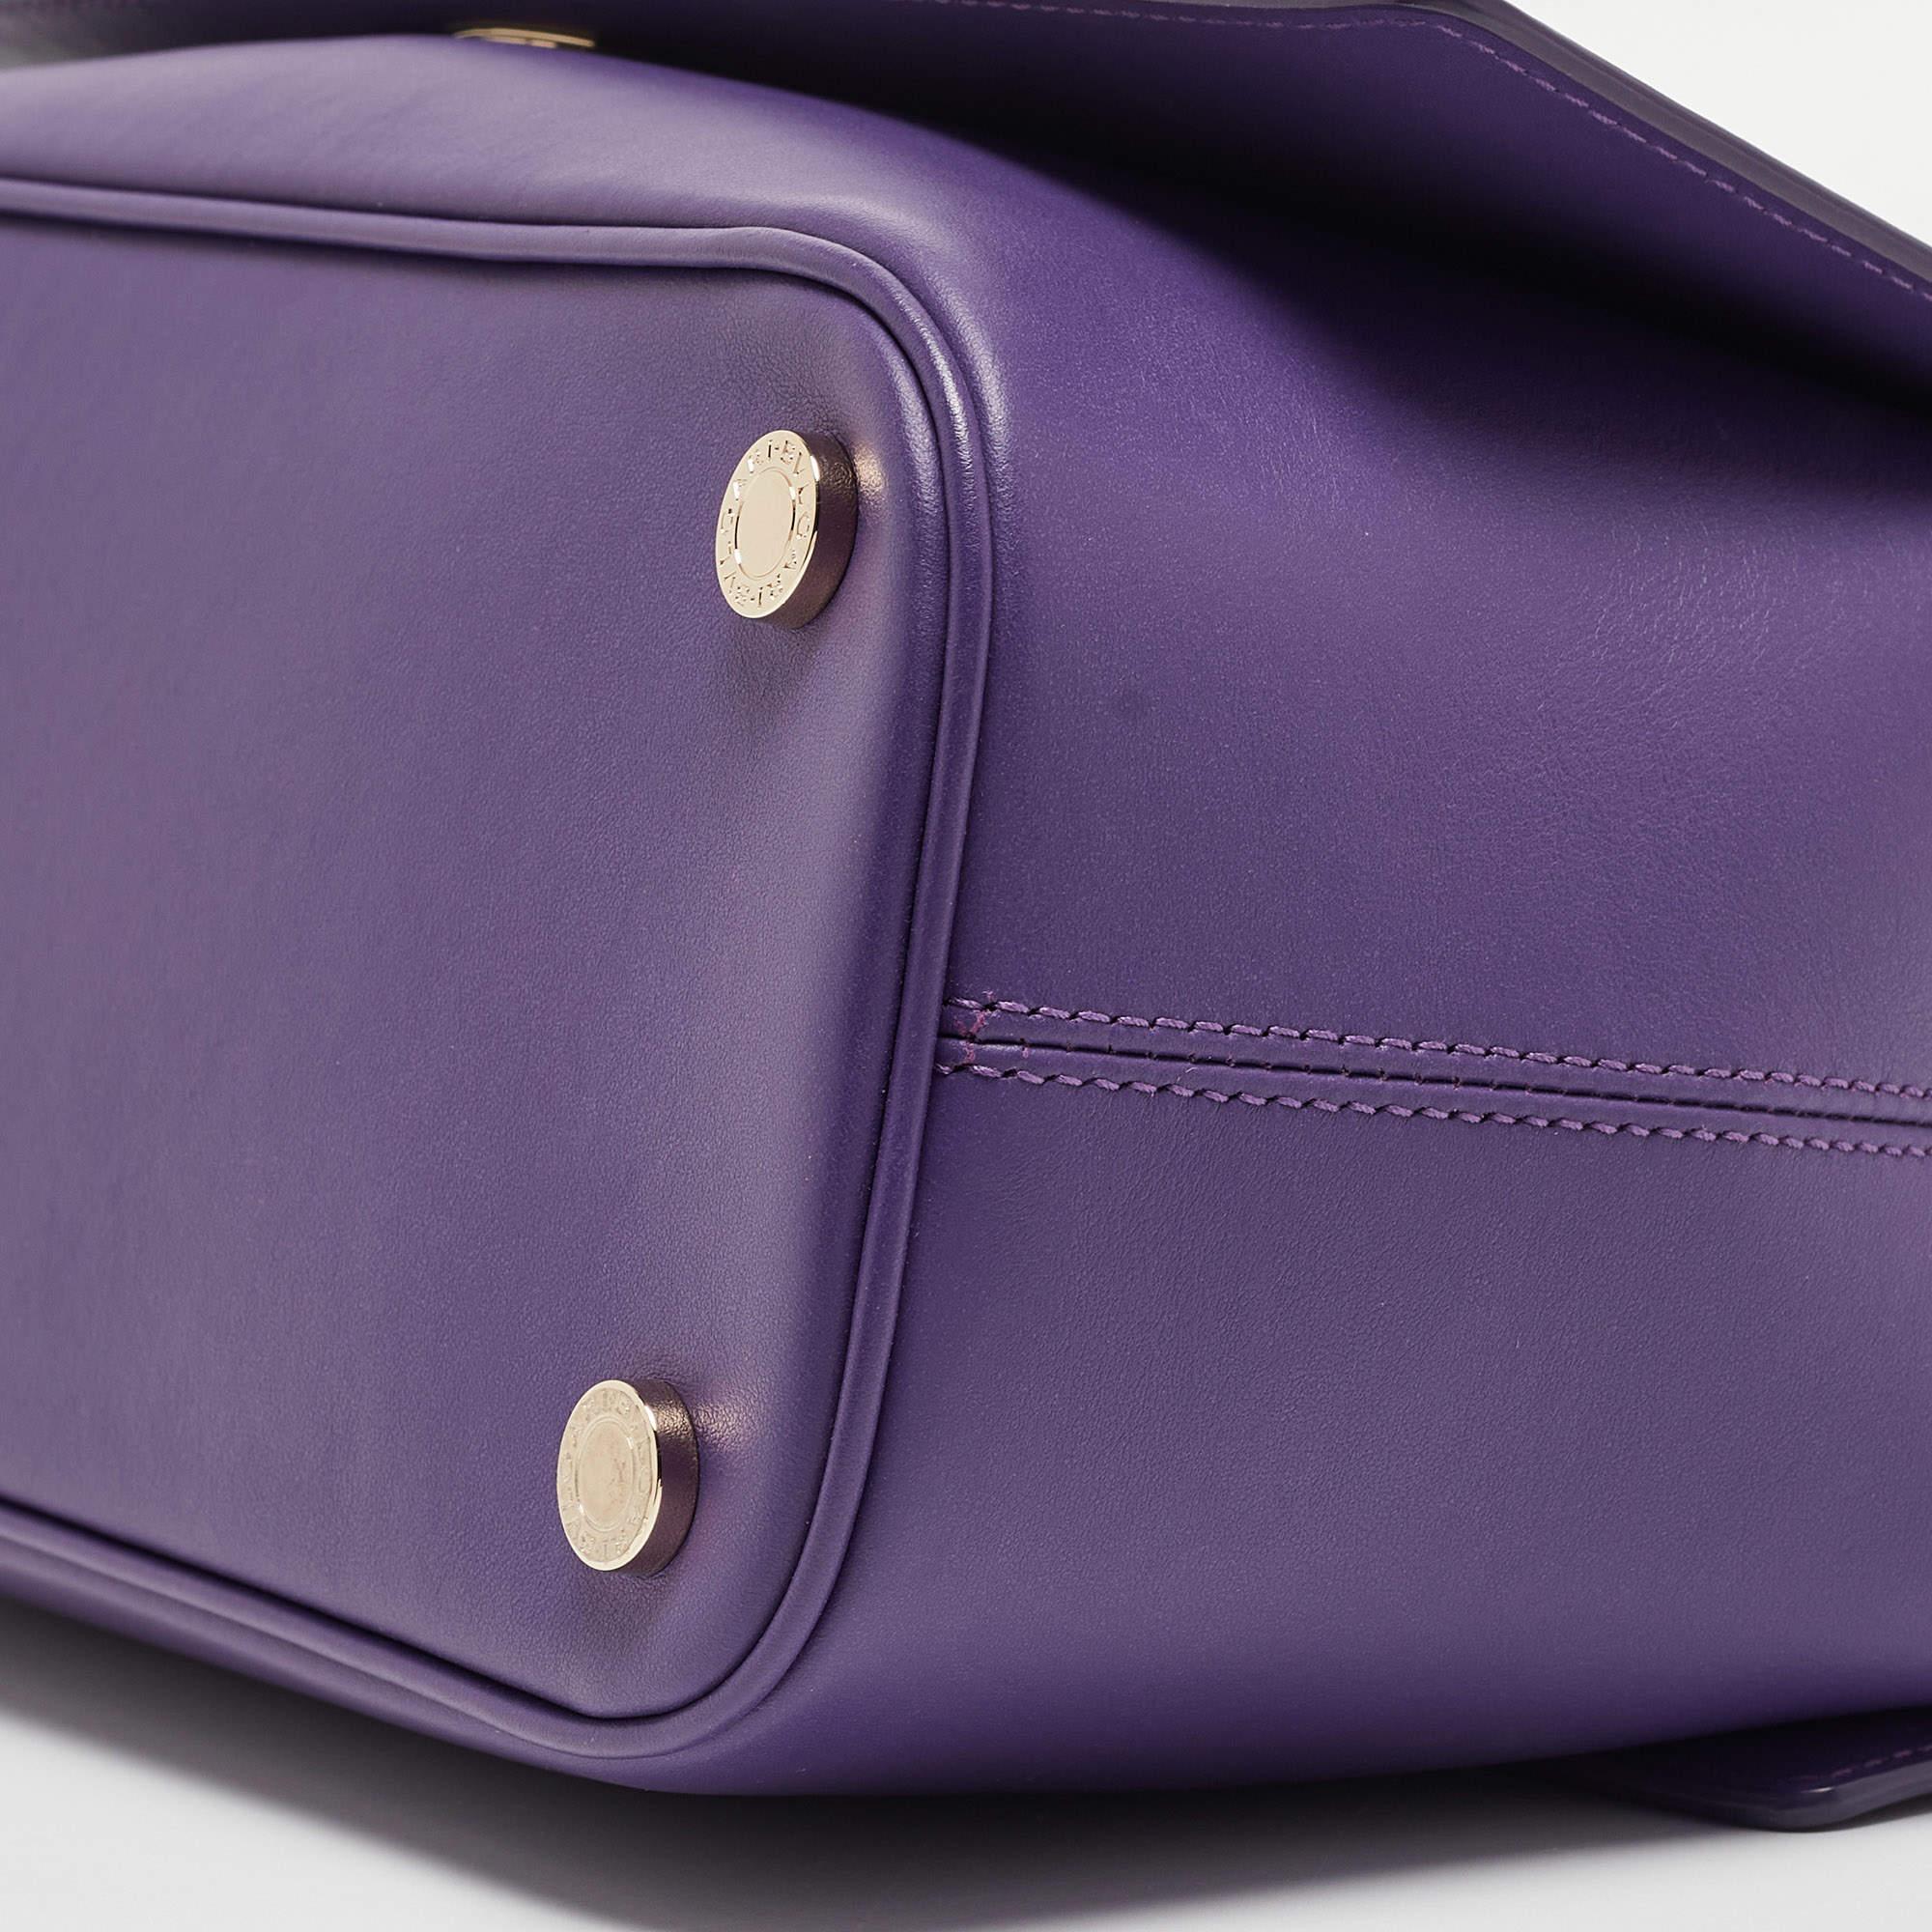 Bvlgari Purple/Black Leather Bvlgari Duet Top Handle Bag For Sale 3